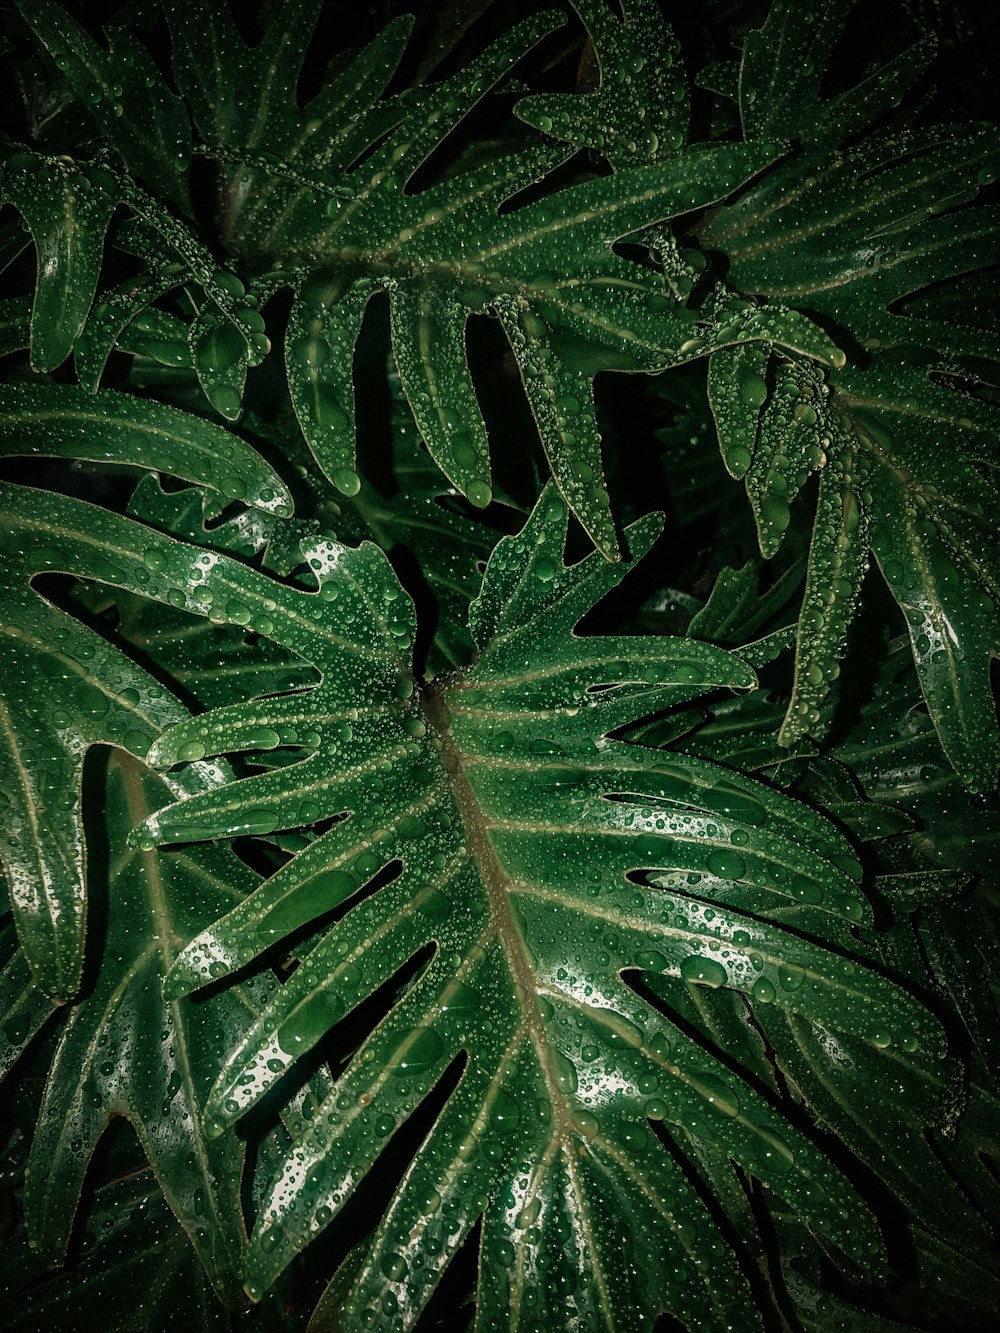 green palm plant